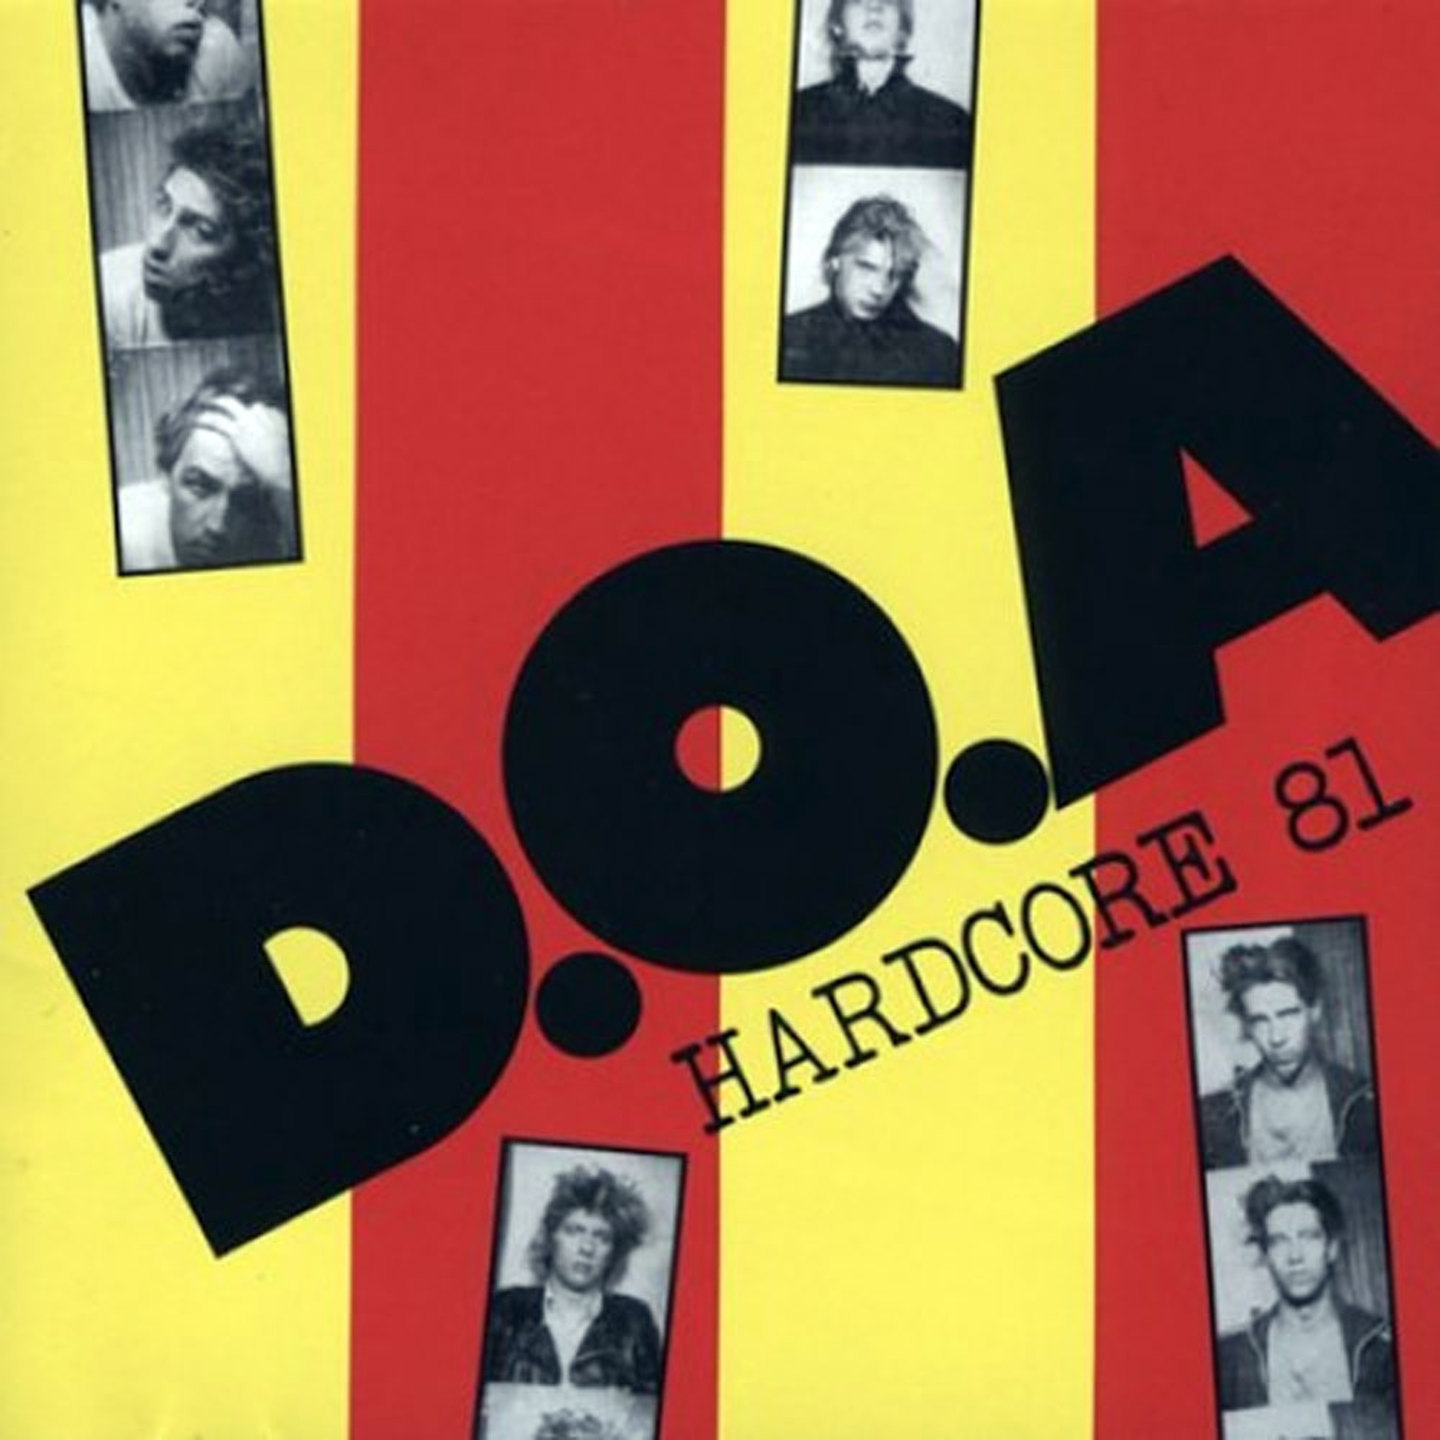 D.O.A. - Hardcore 81 LP